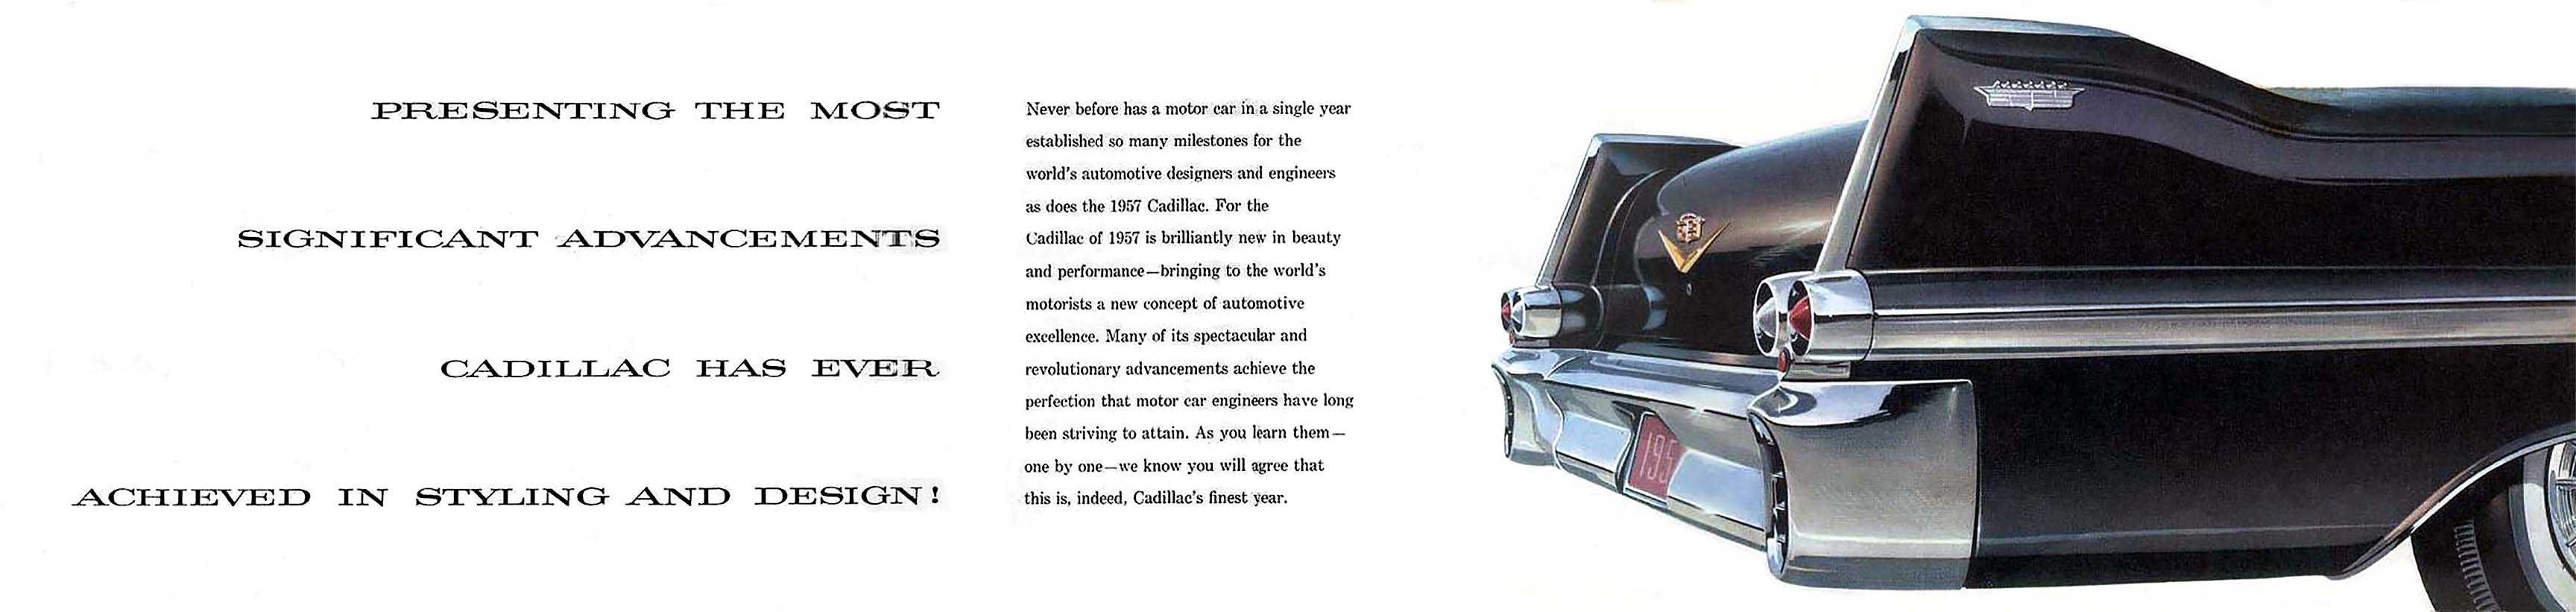 1957_Cadillac_Foldout-03